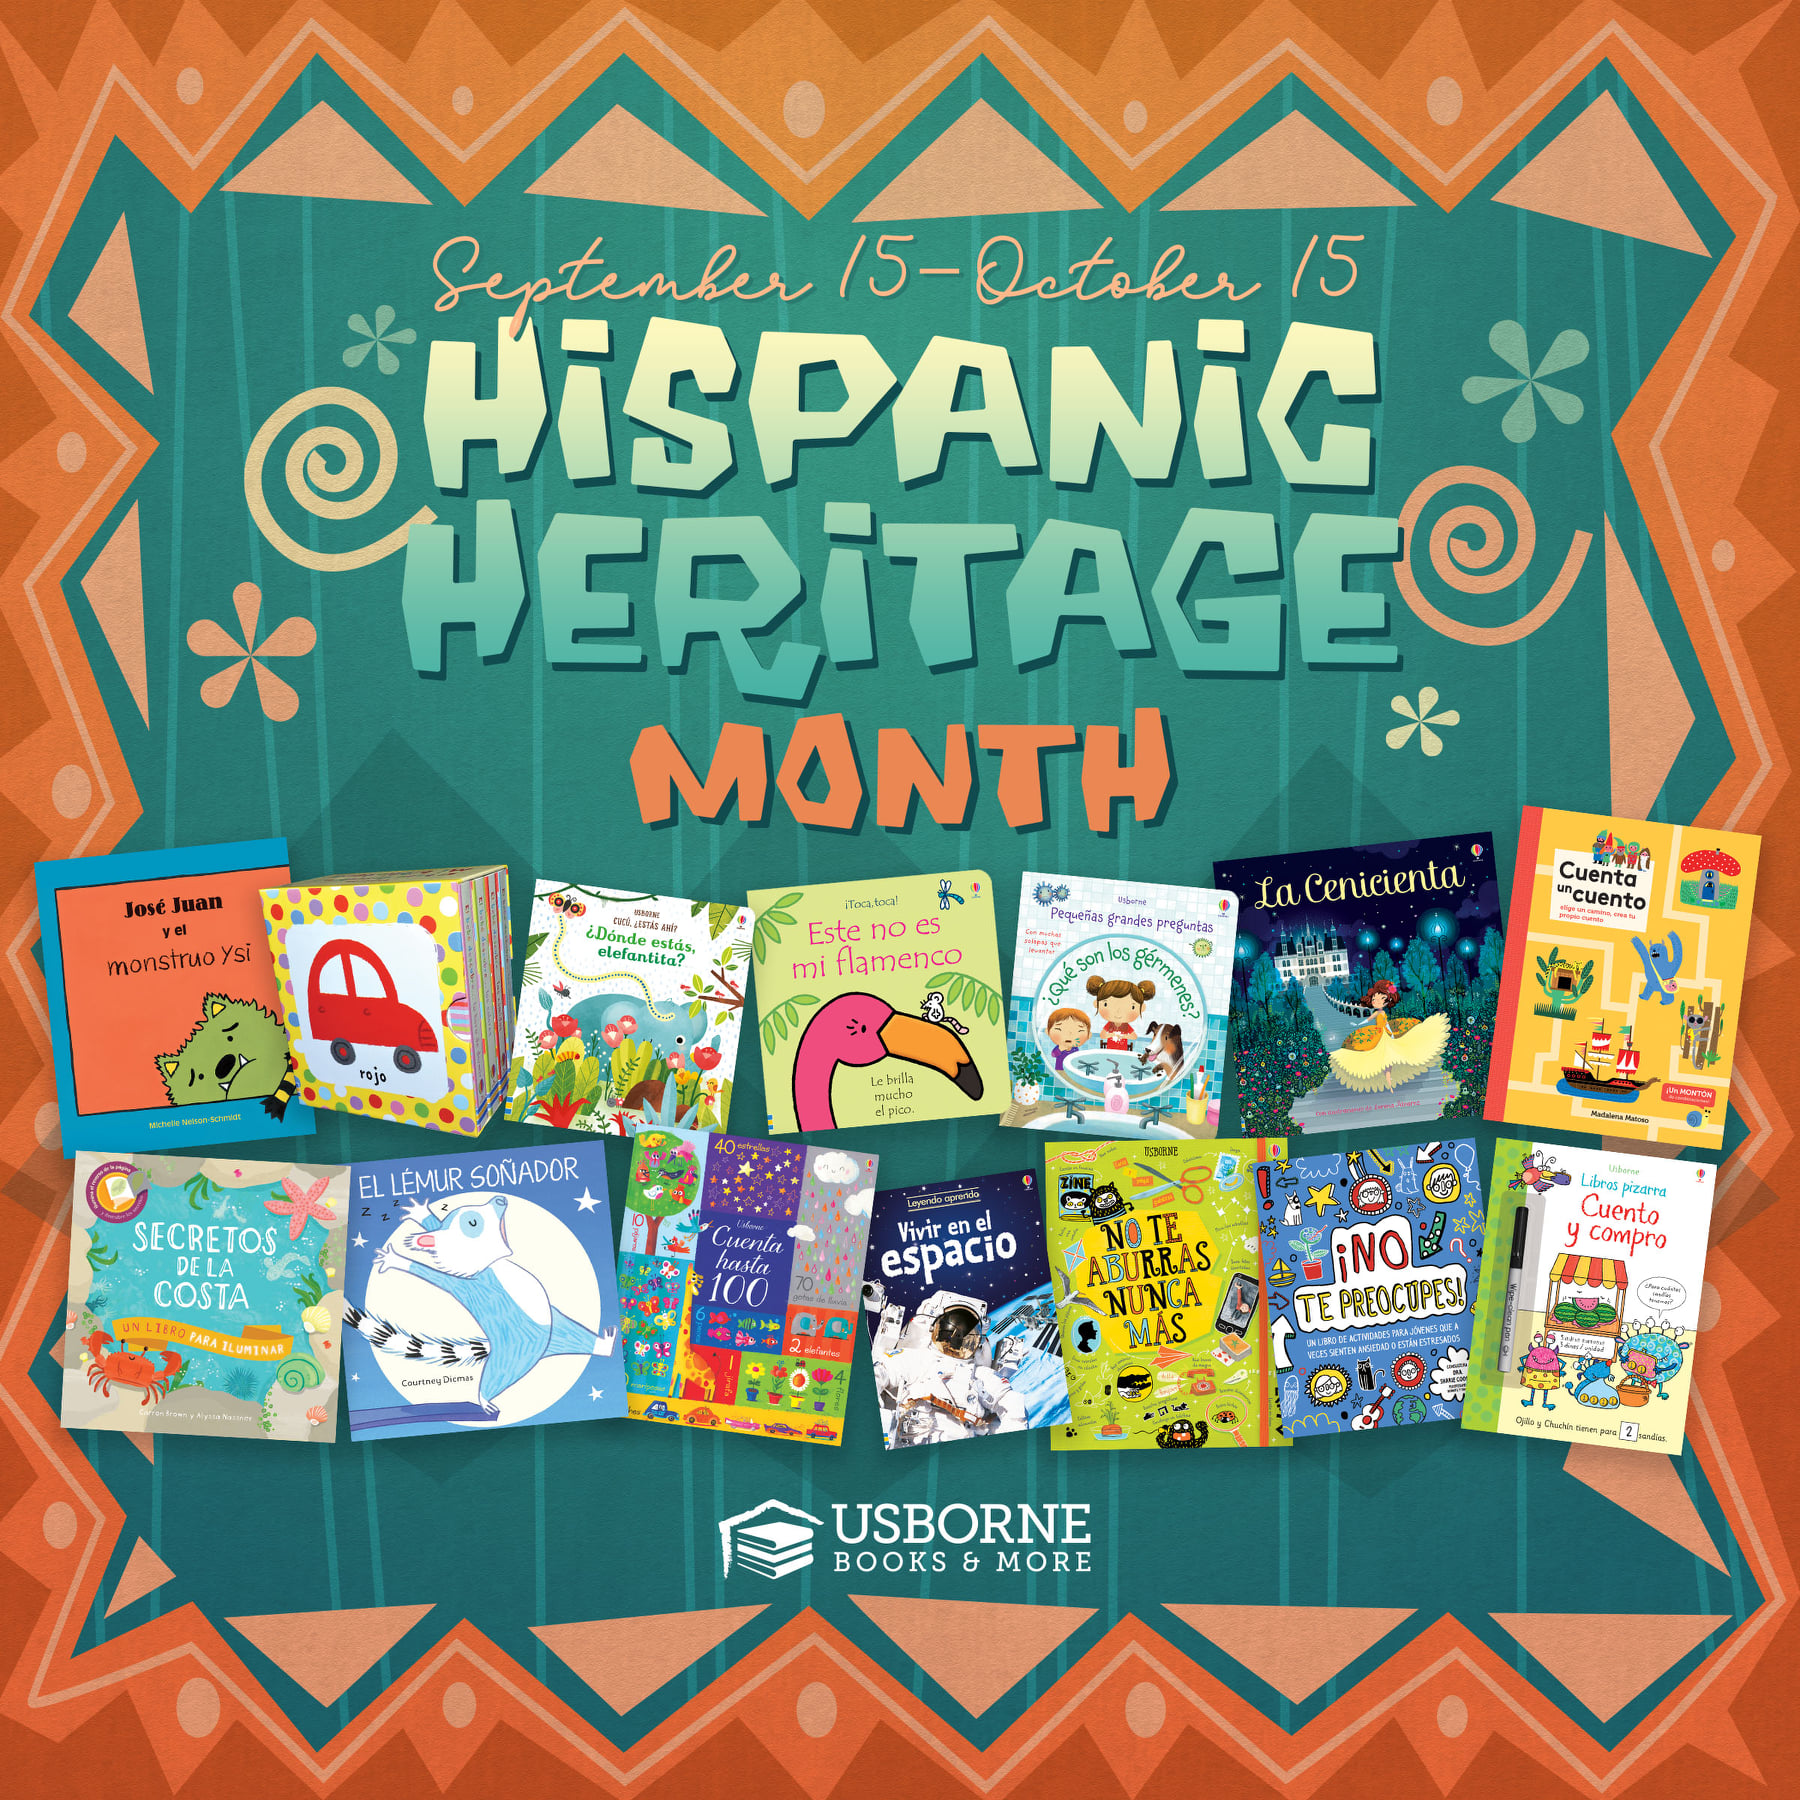 National Hispanic Heritage Month ~ September 15 - October 15